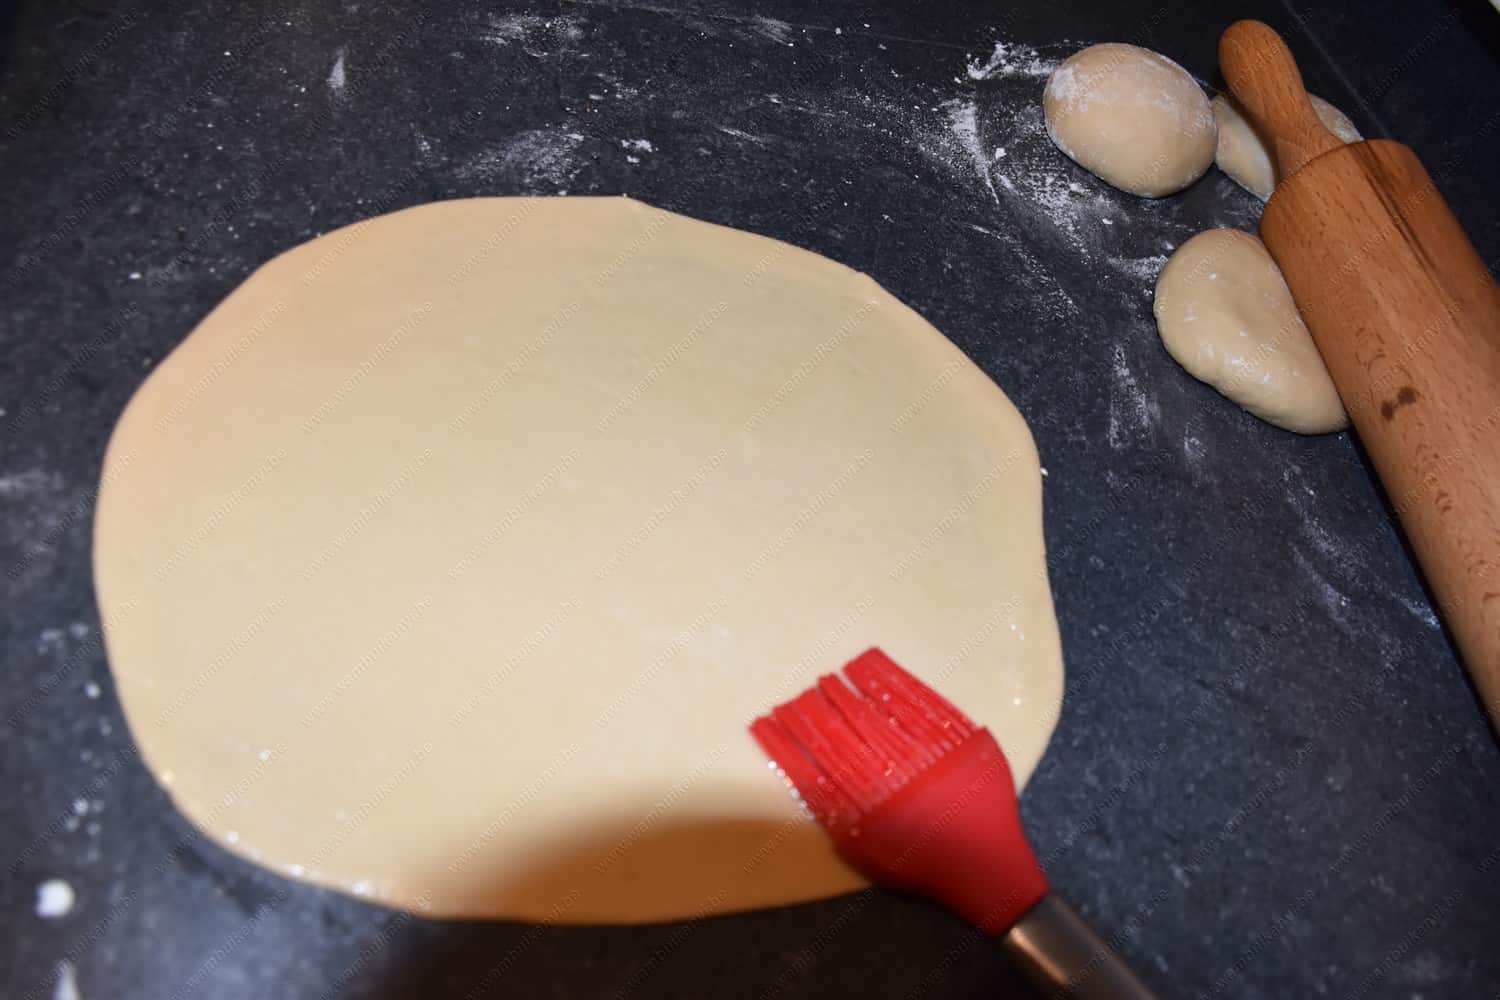 How to Make Chapati